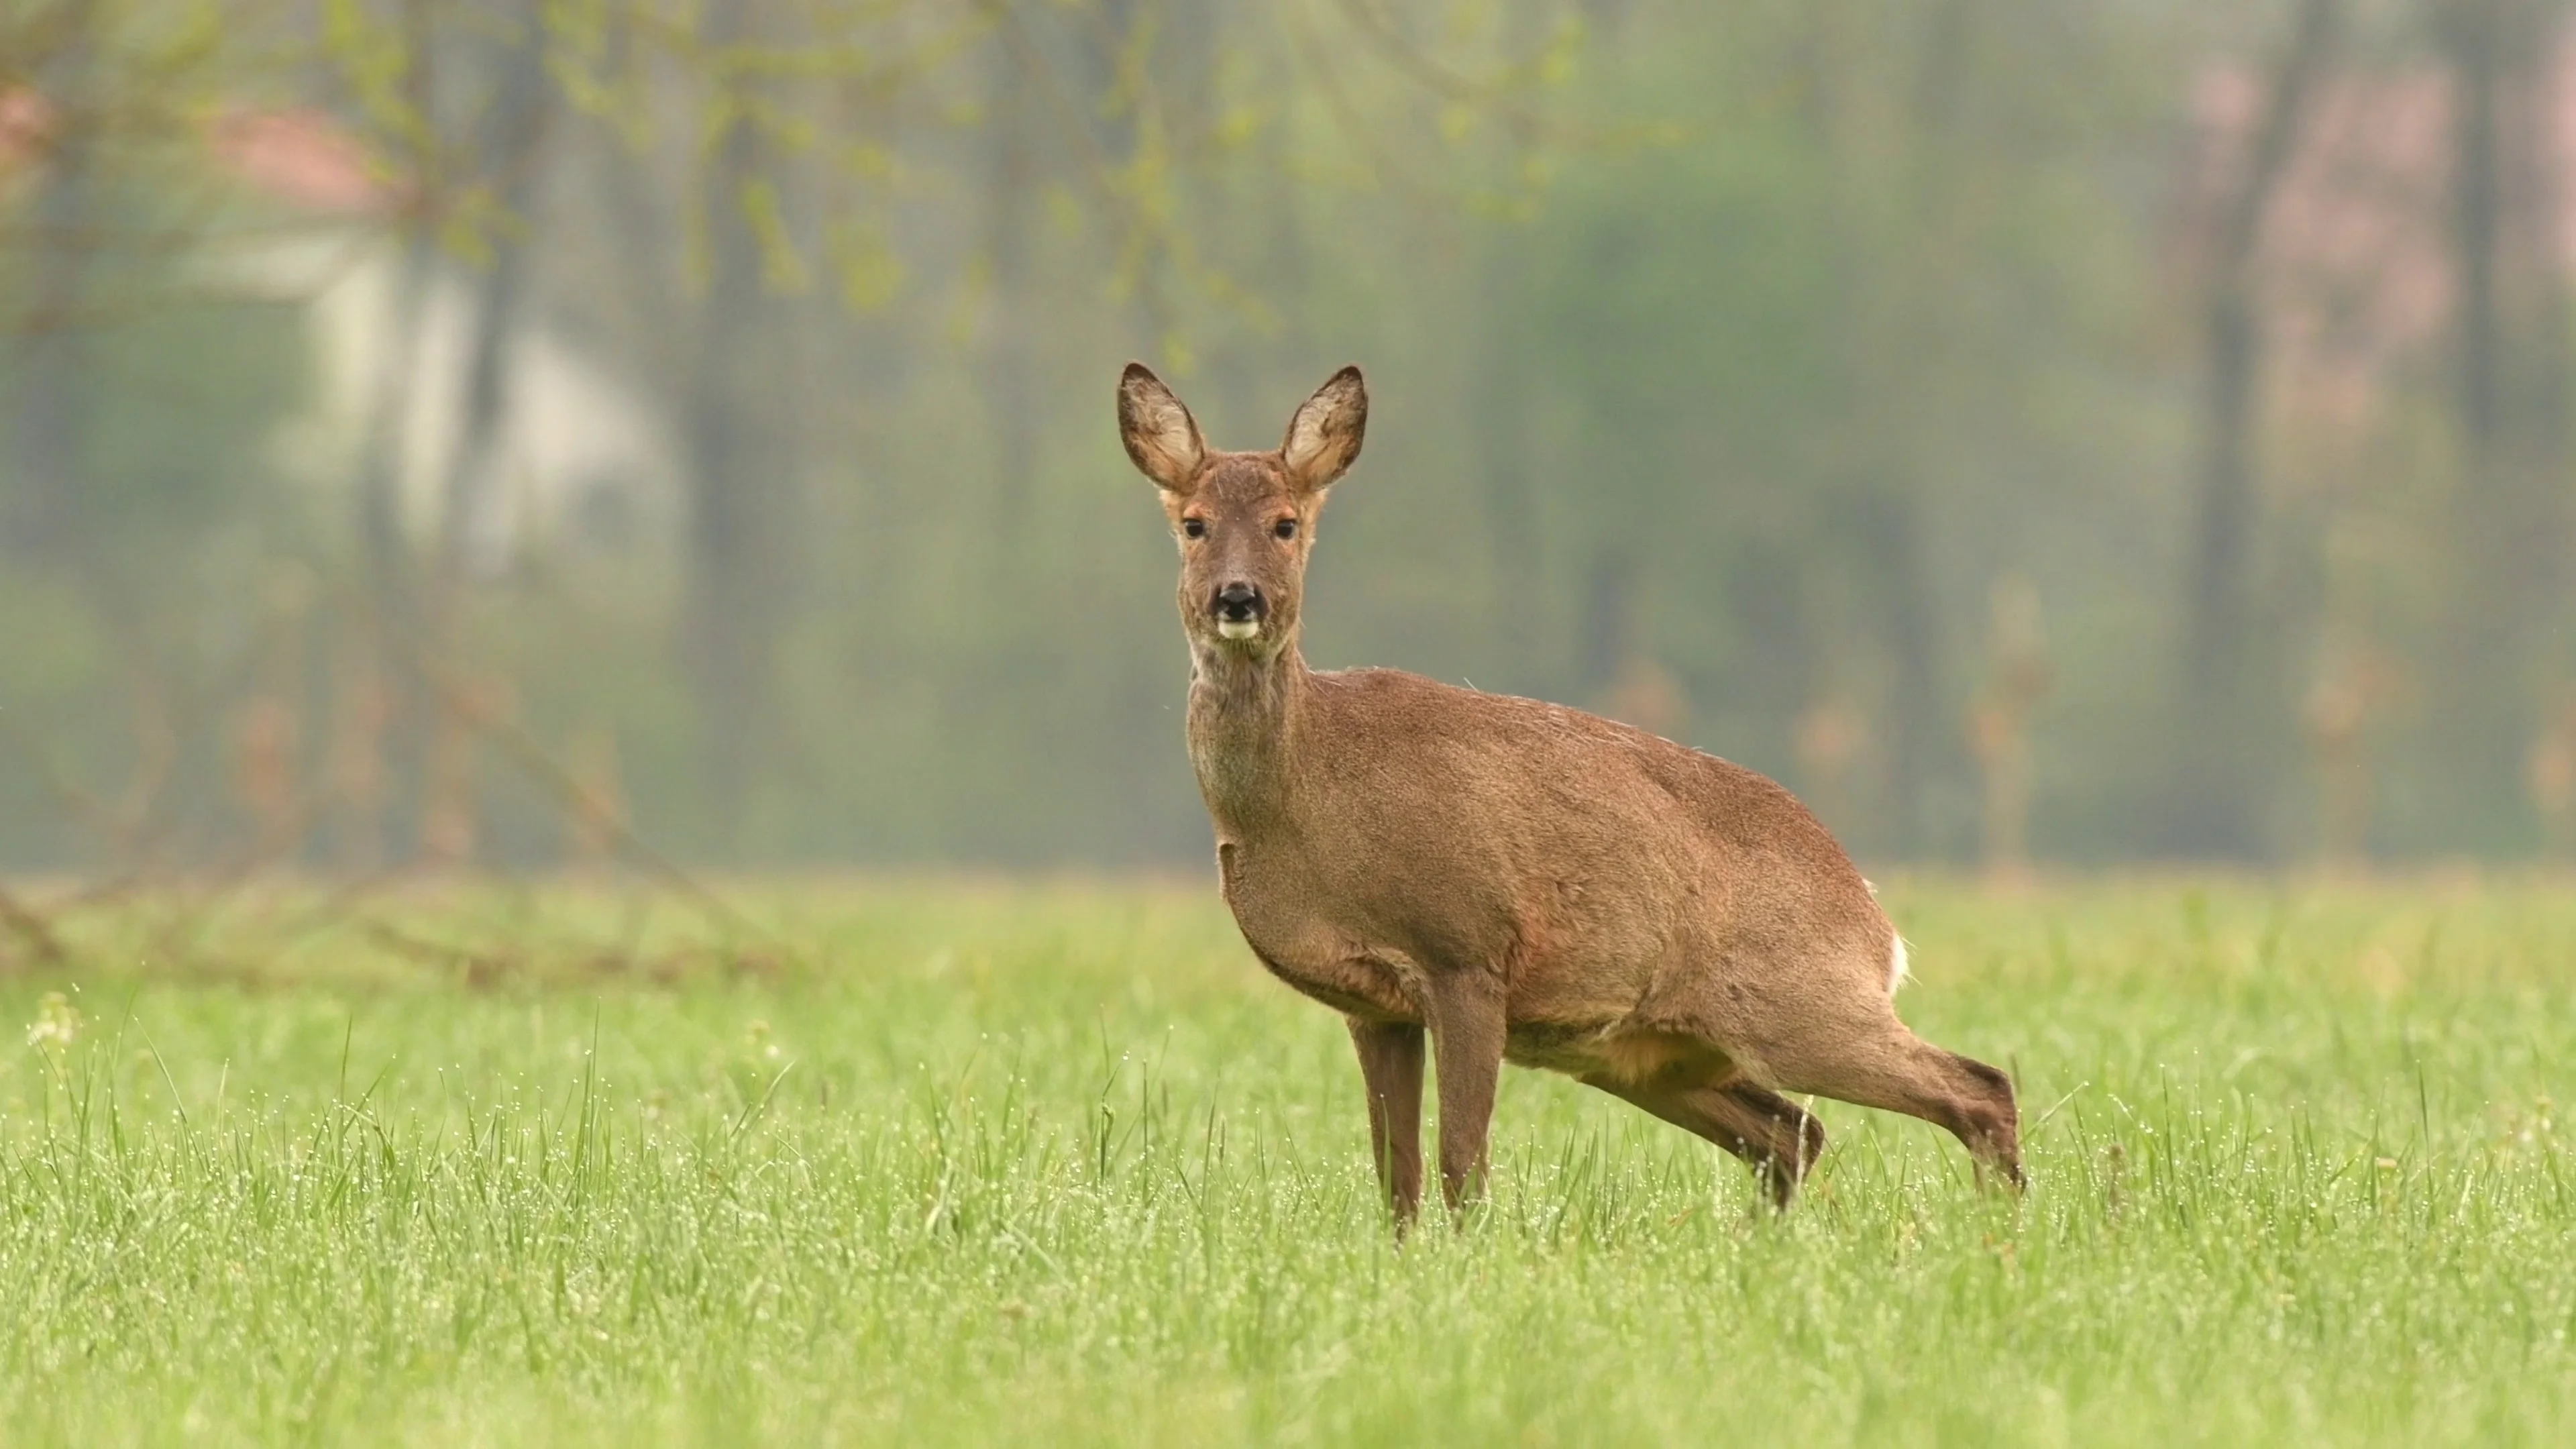 Roe deer, hirsch, wild, eat, horror - free image from